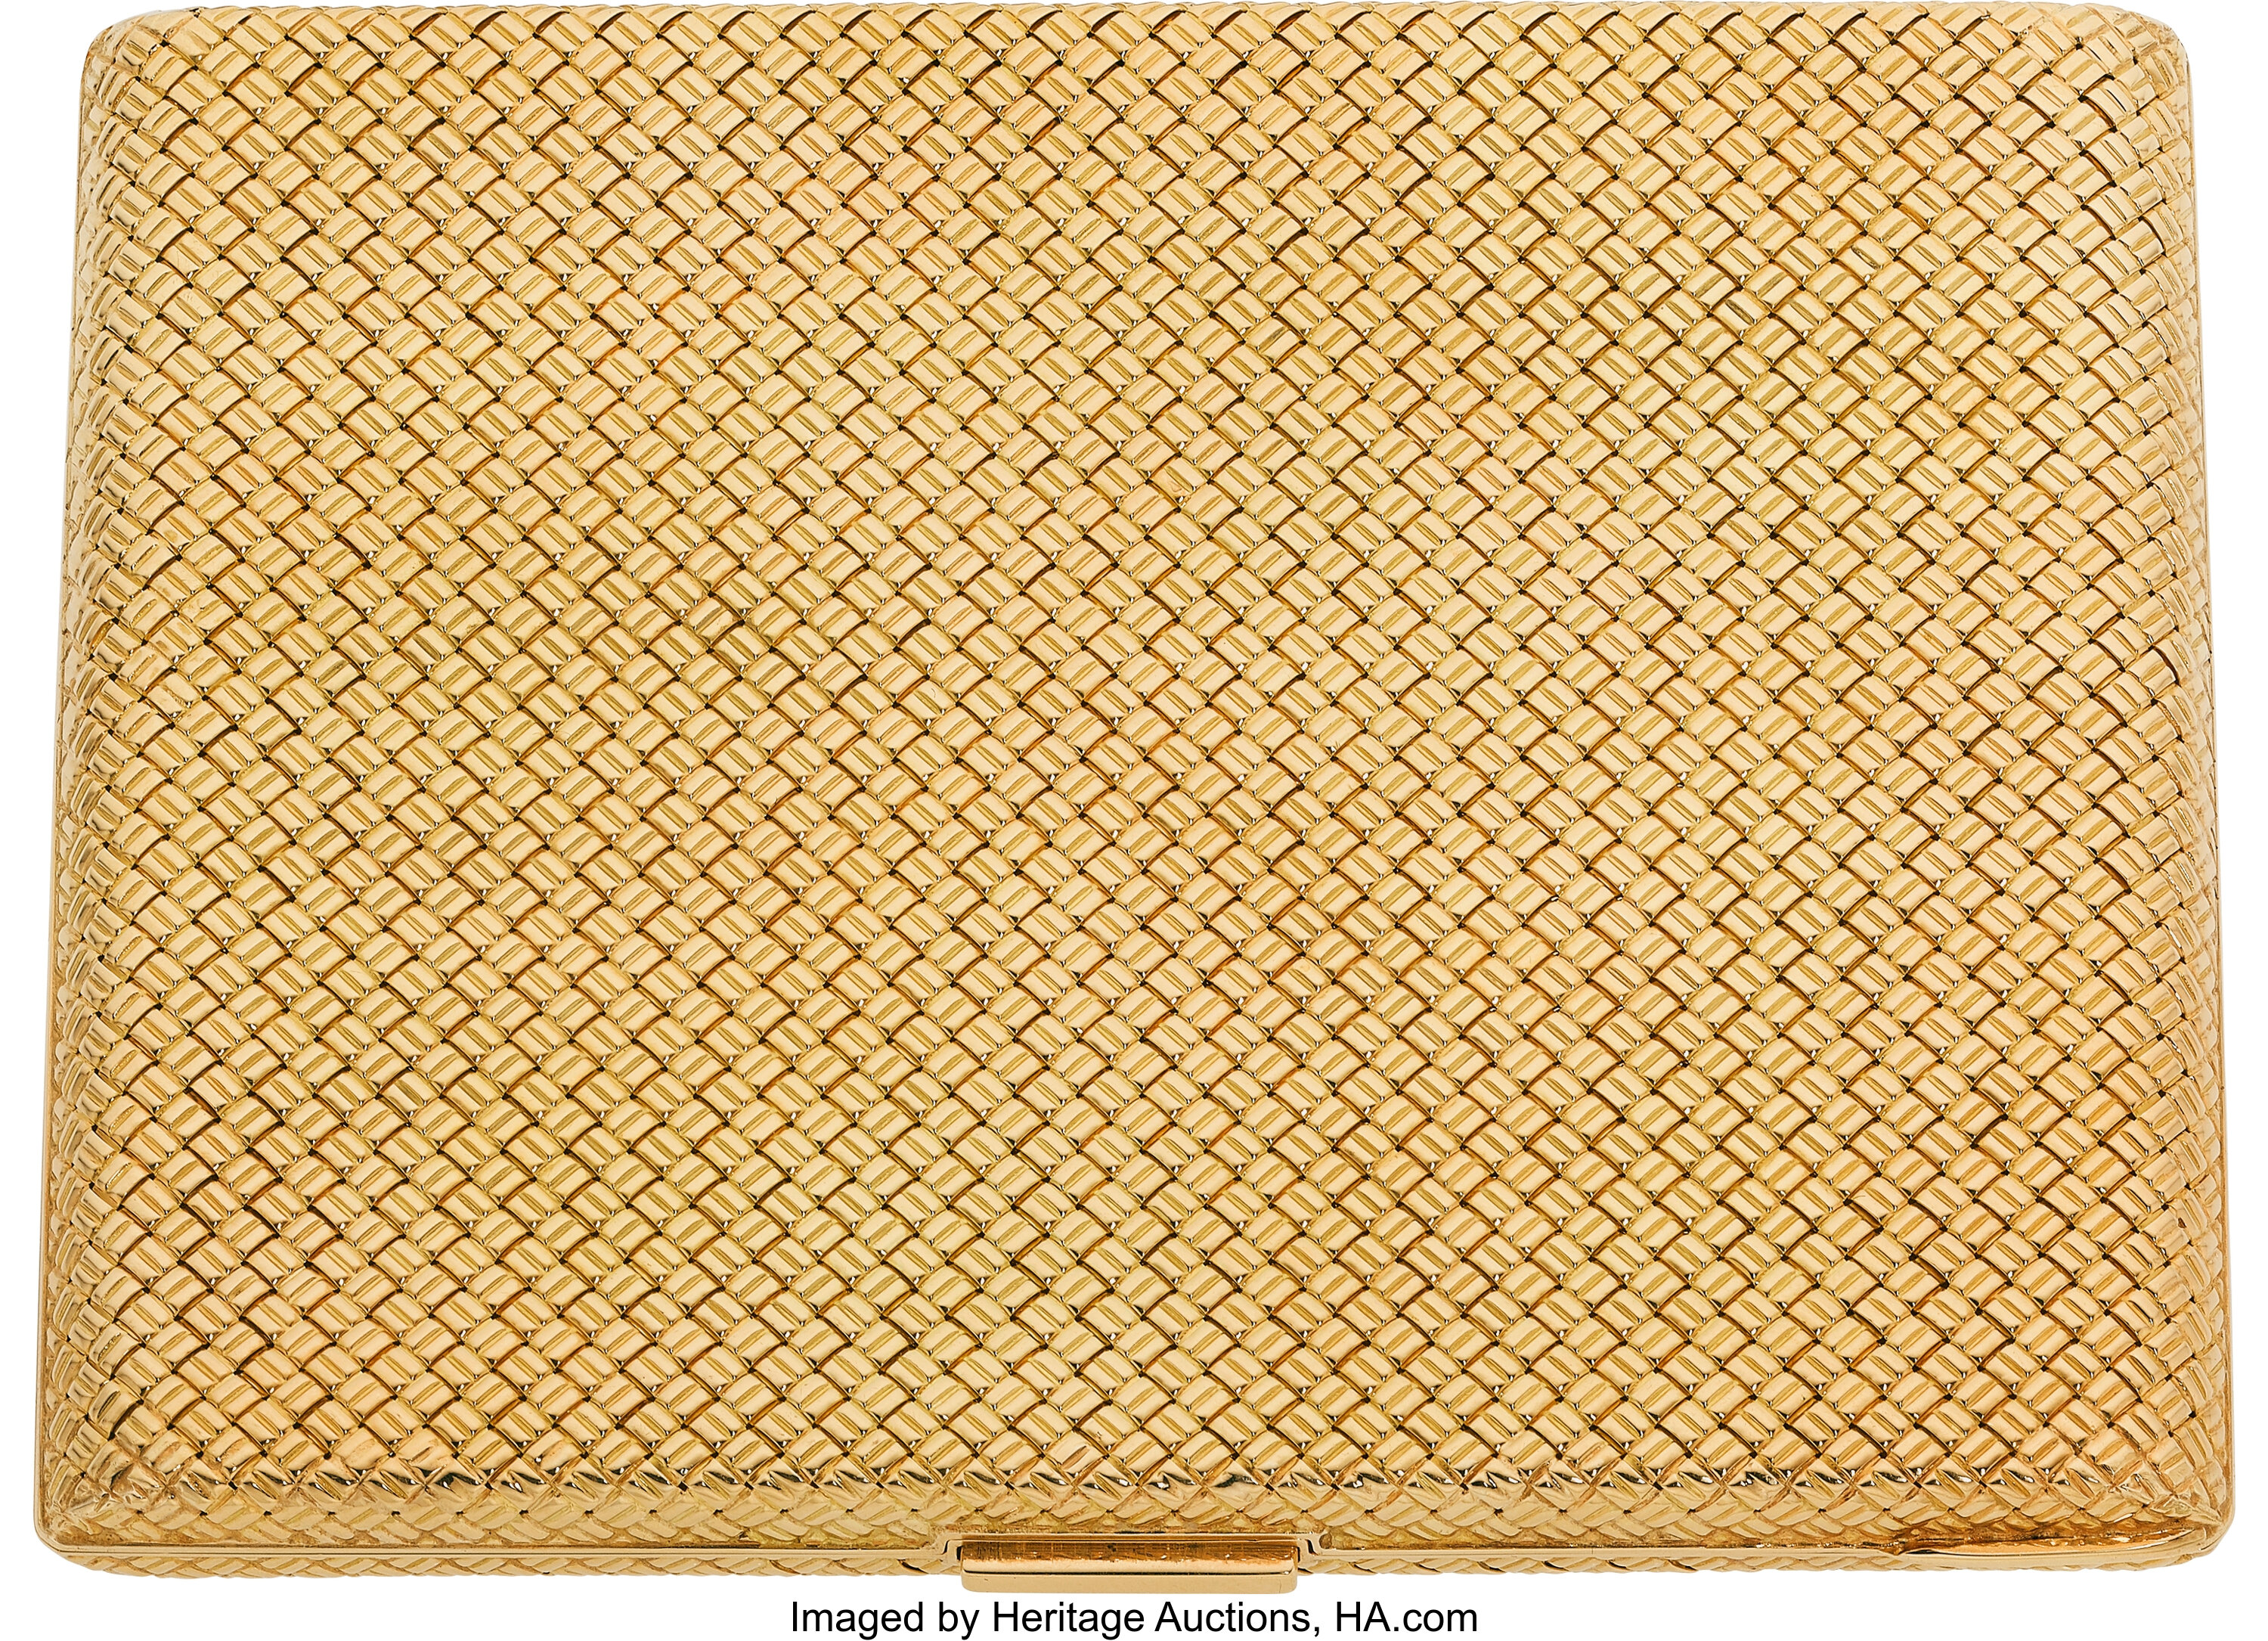 AN 18K GOLD CIGARETTE CASE, BY VAN CLEEF & ARPELS